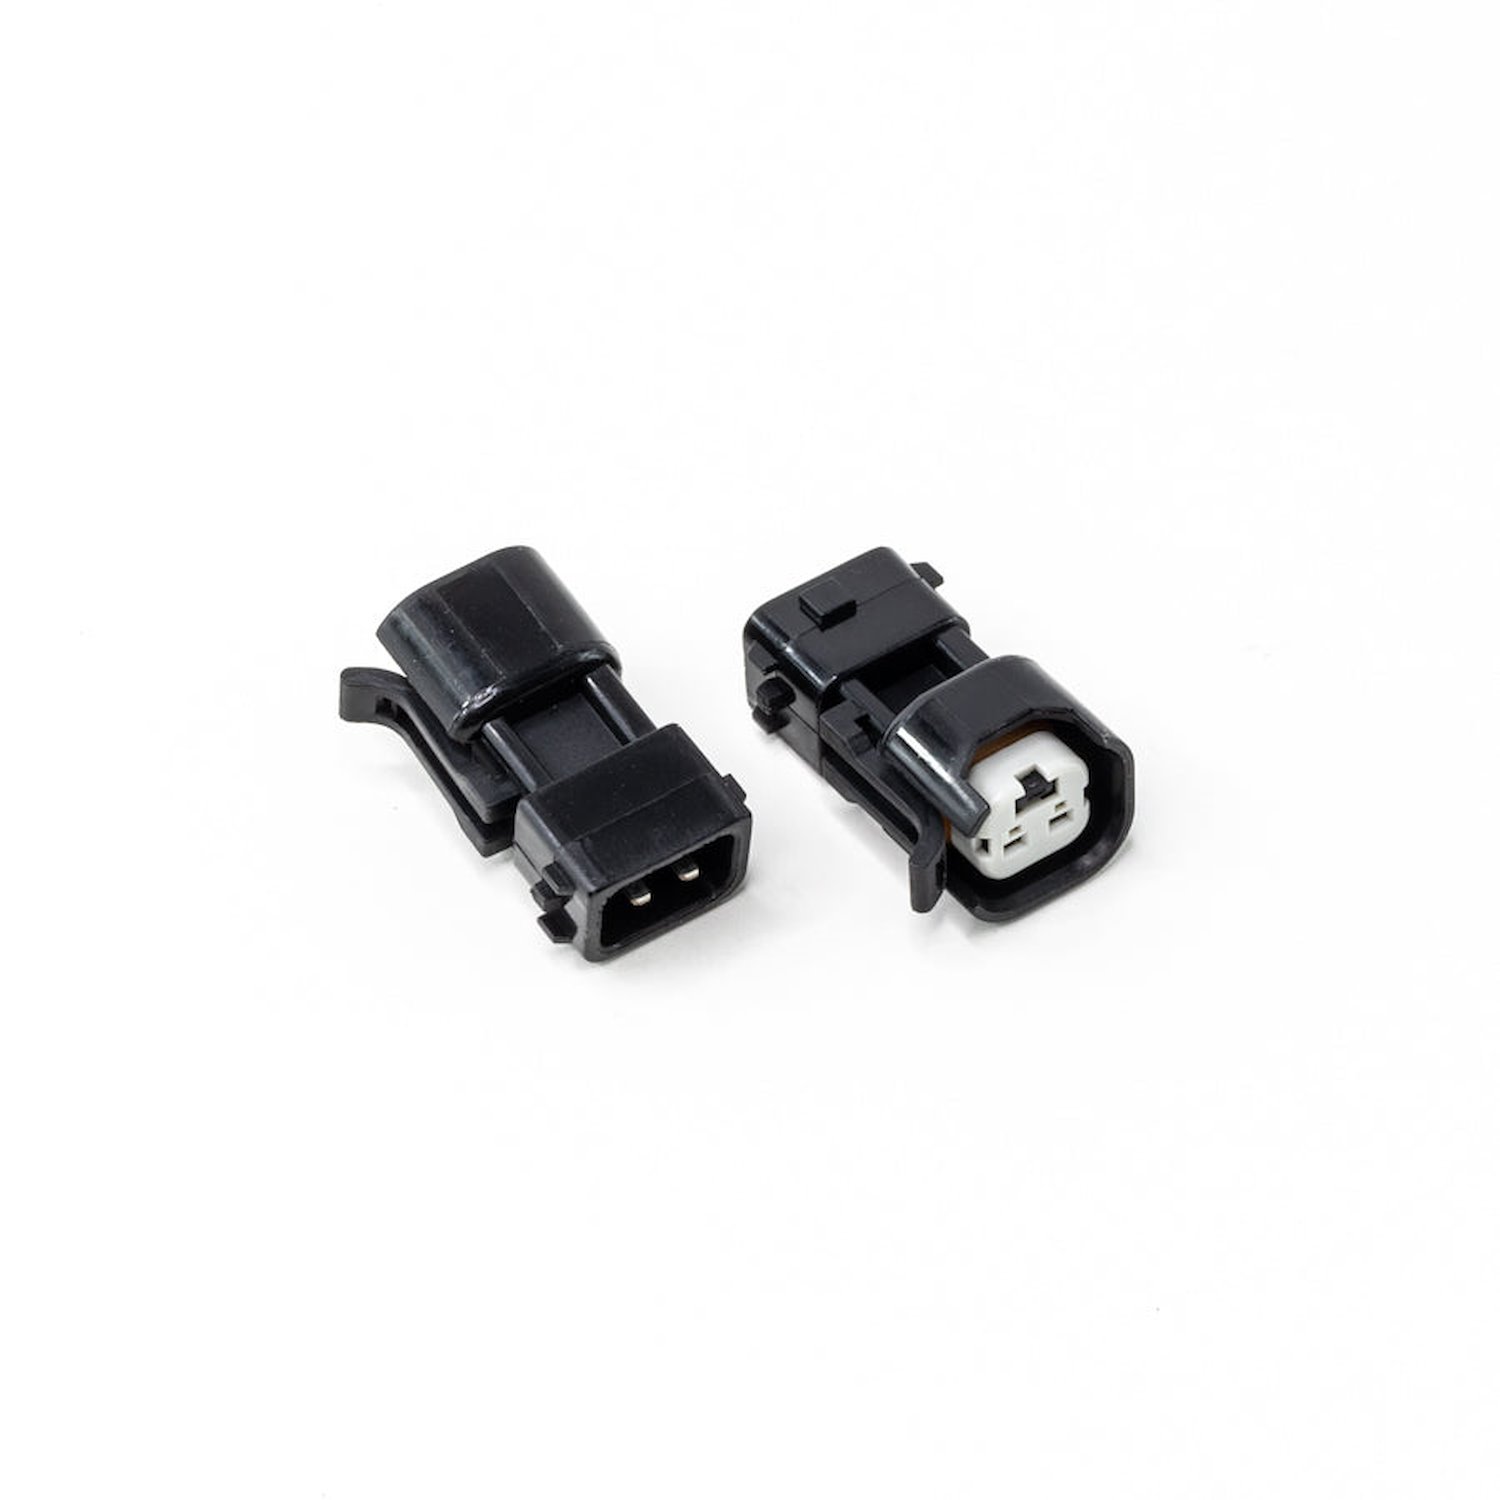 connUSHON Uscar to Honda (OBD2/K-series type) PnP adapter